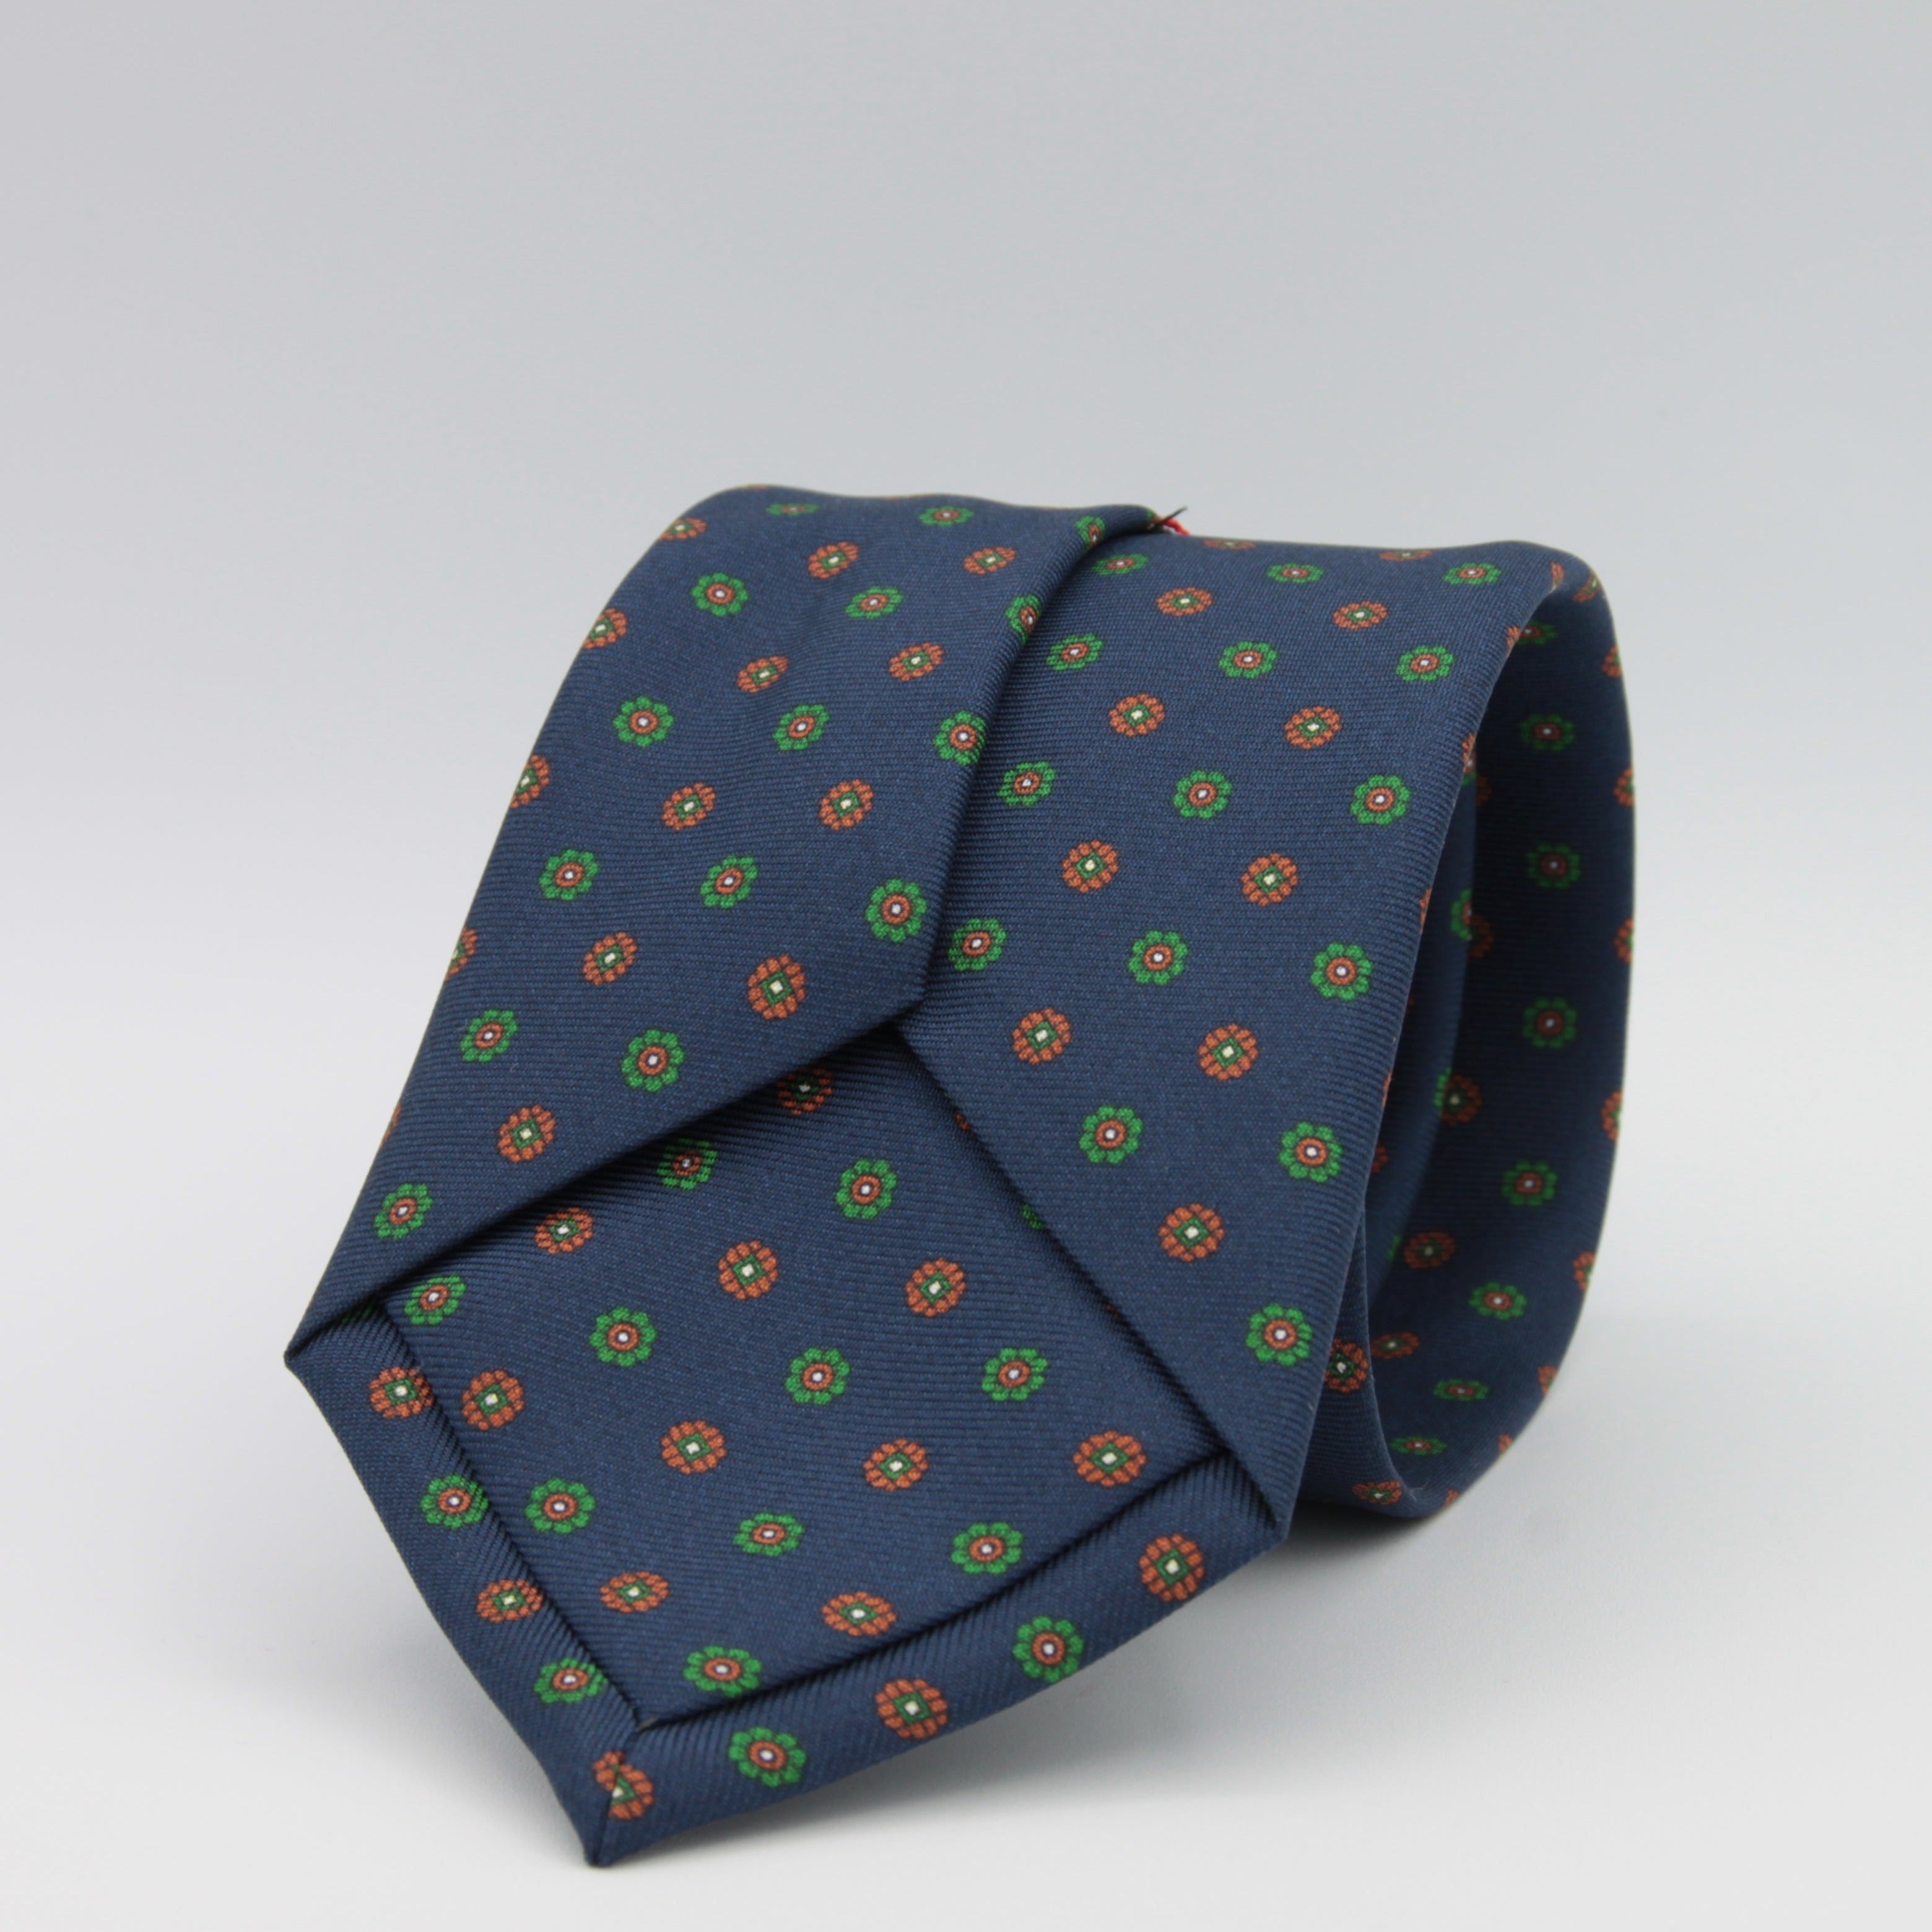 Cruciani & Bella 100% Silk Printed Self-Tipped Blue,Green and Brown Motif Tie Handmade in Italy 8 cm x 150 cm #7168